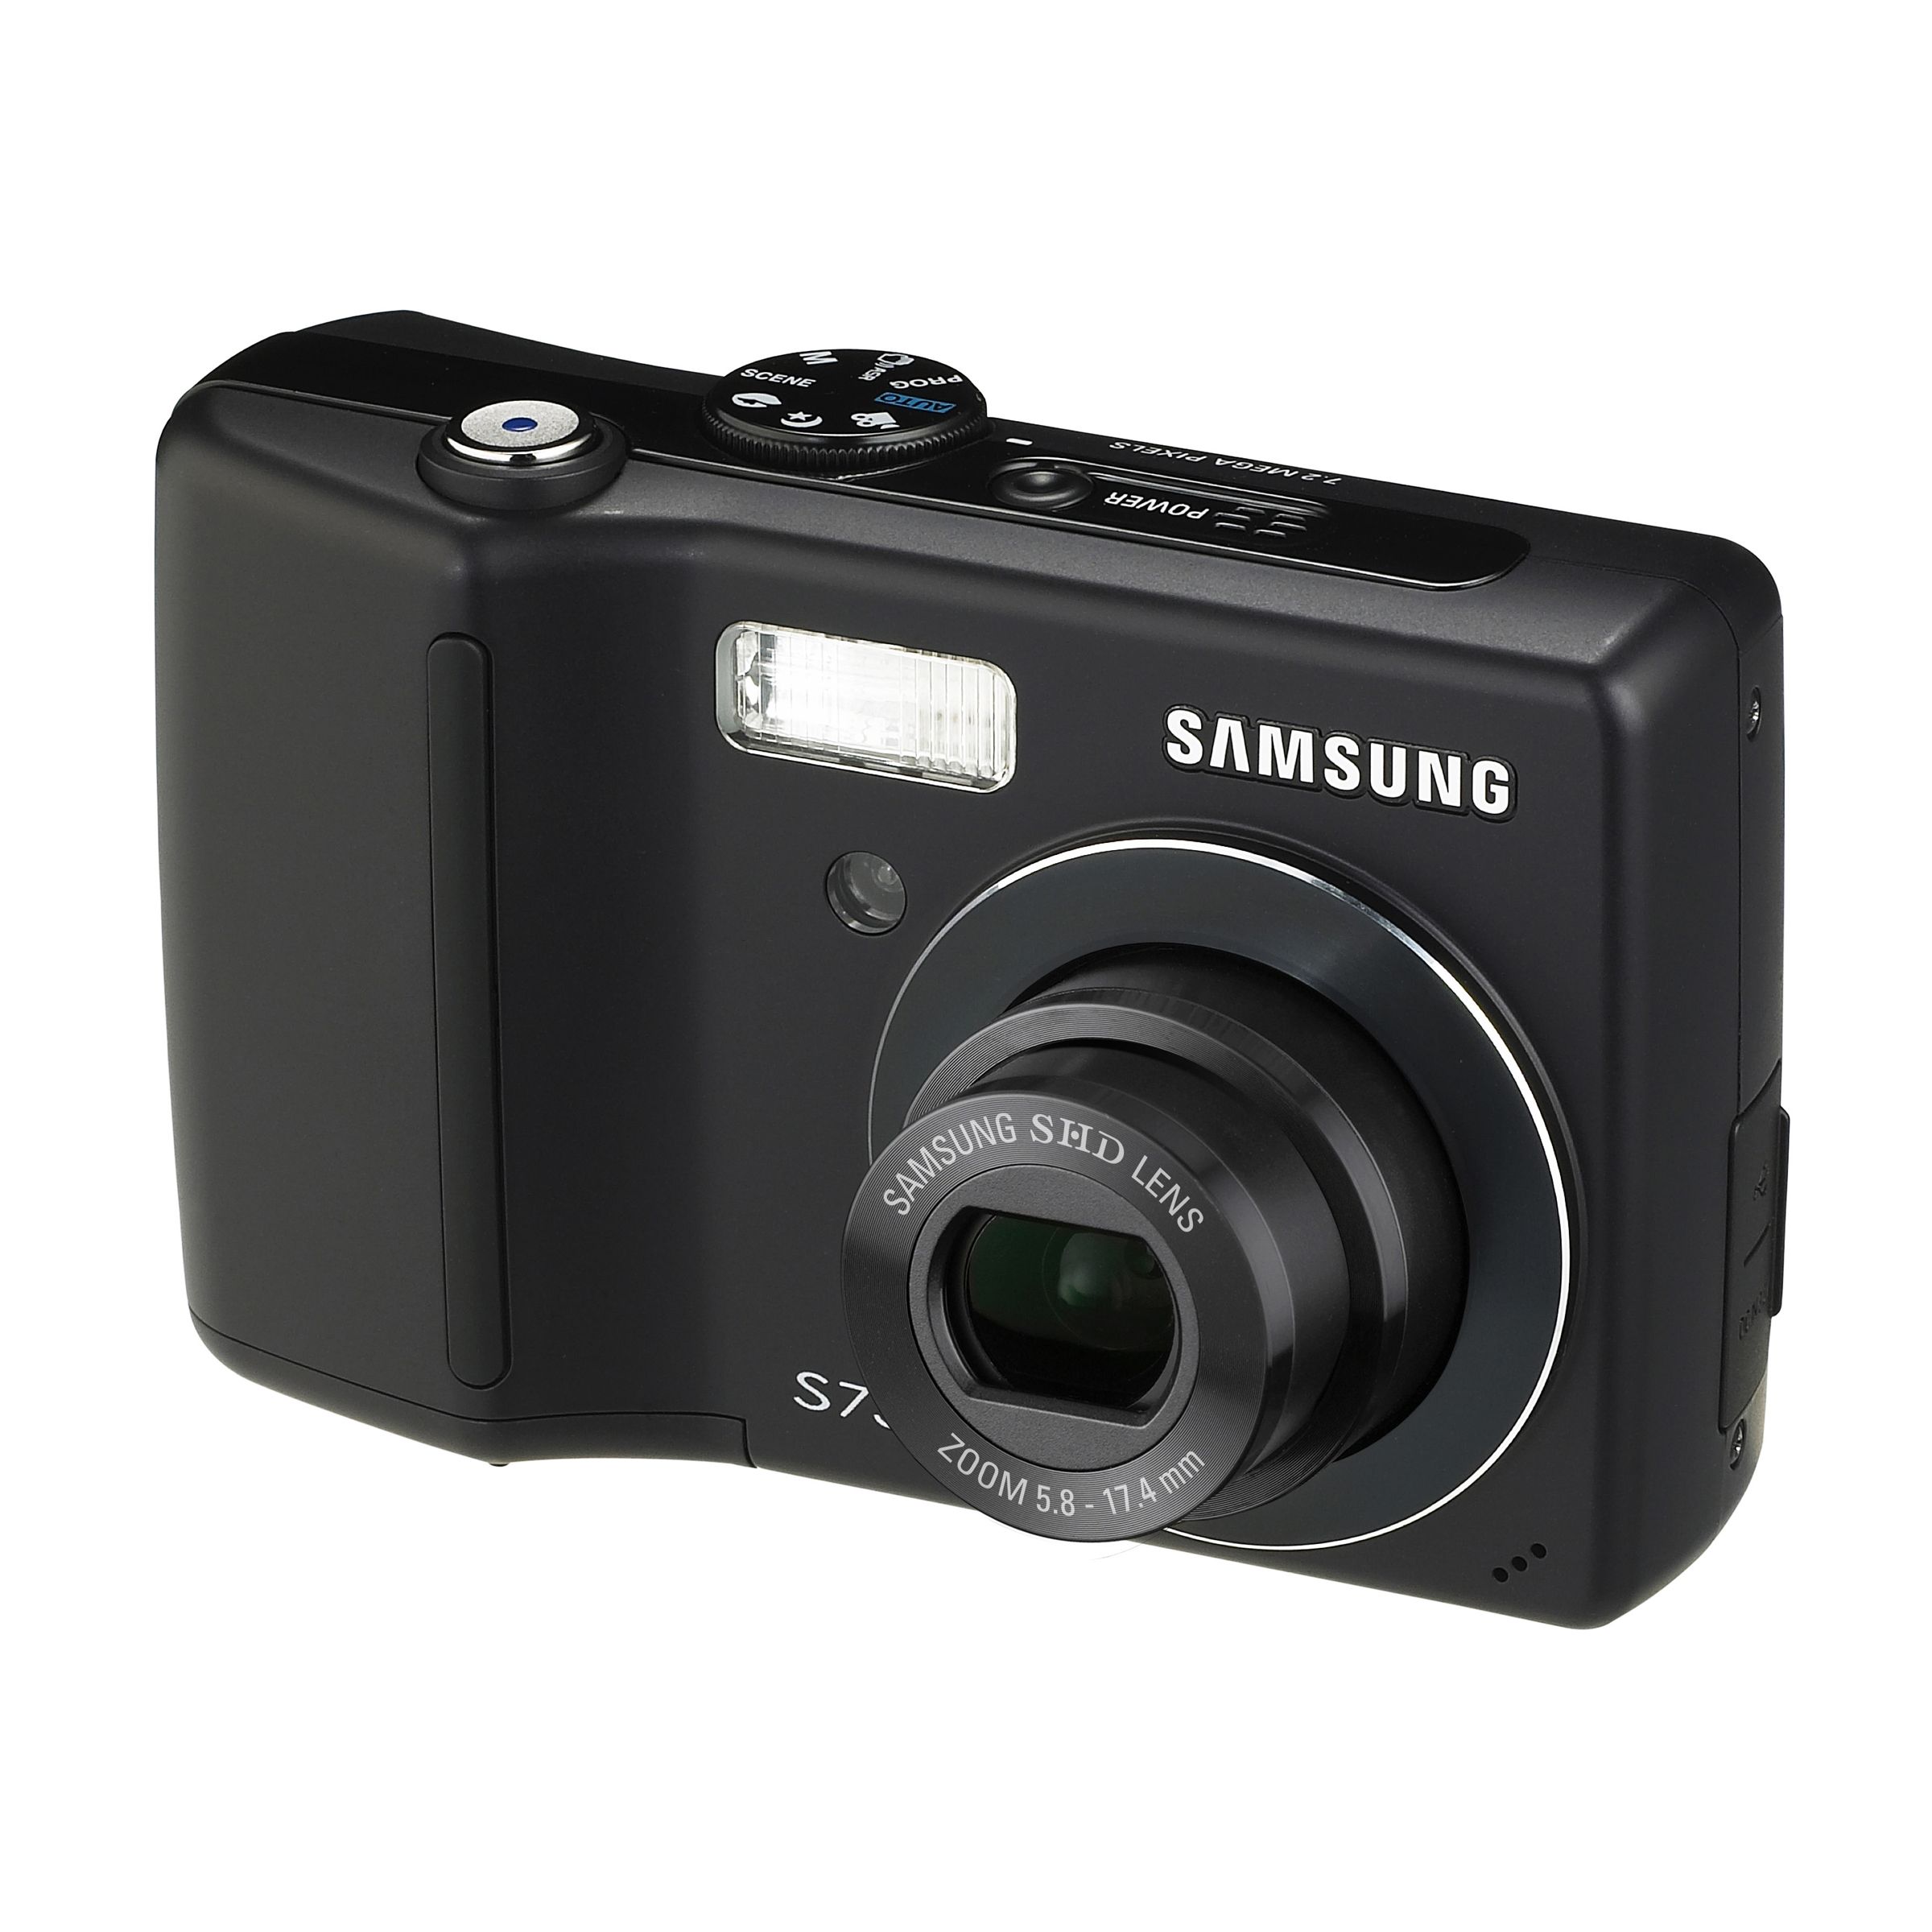 7.2MP Digital Camera with 3x Optical Zoom/5x Digital Zoom, Red